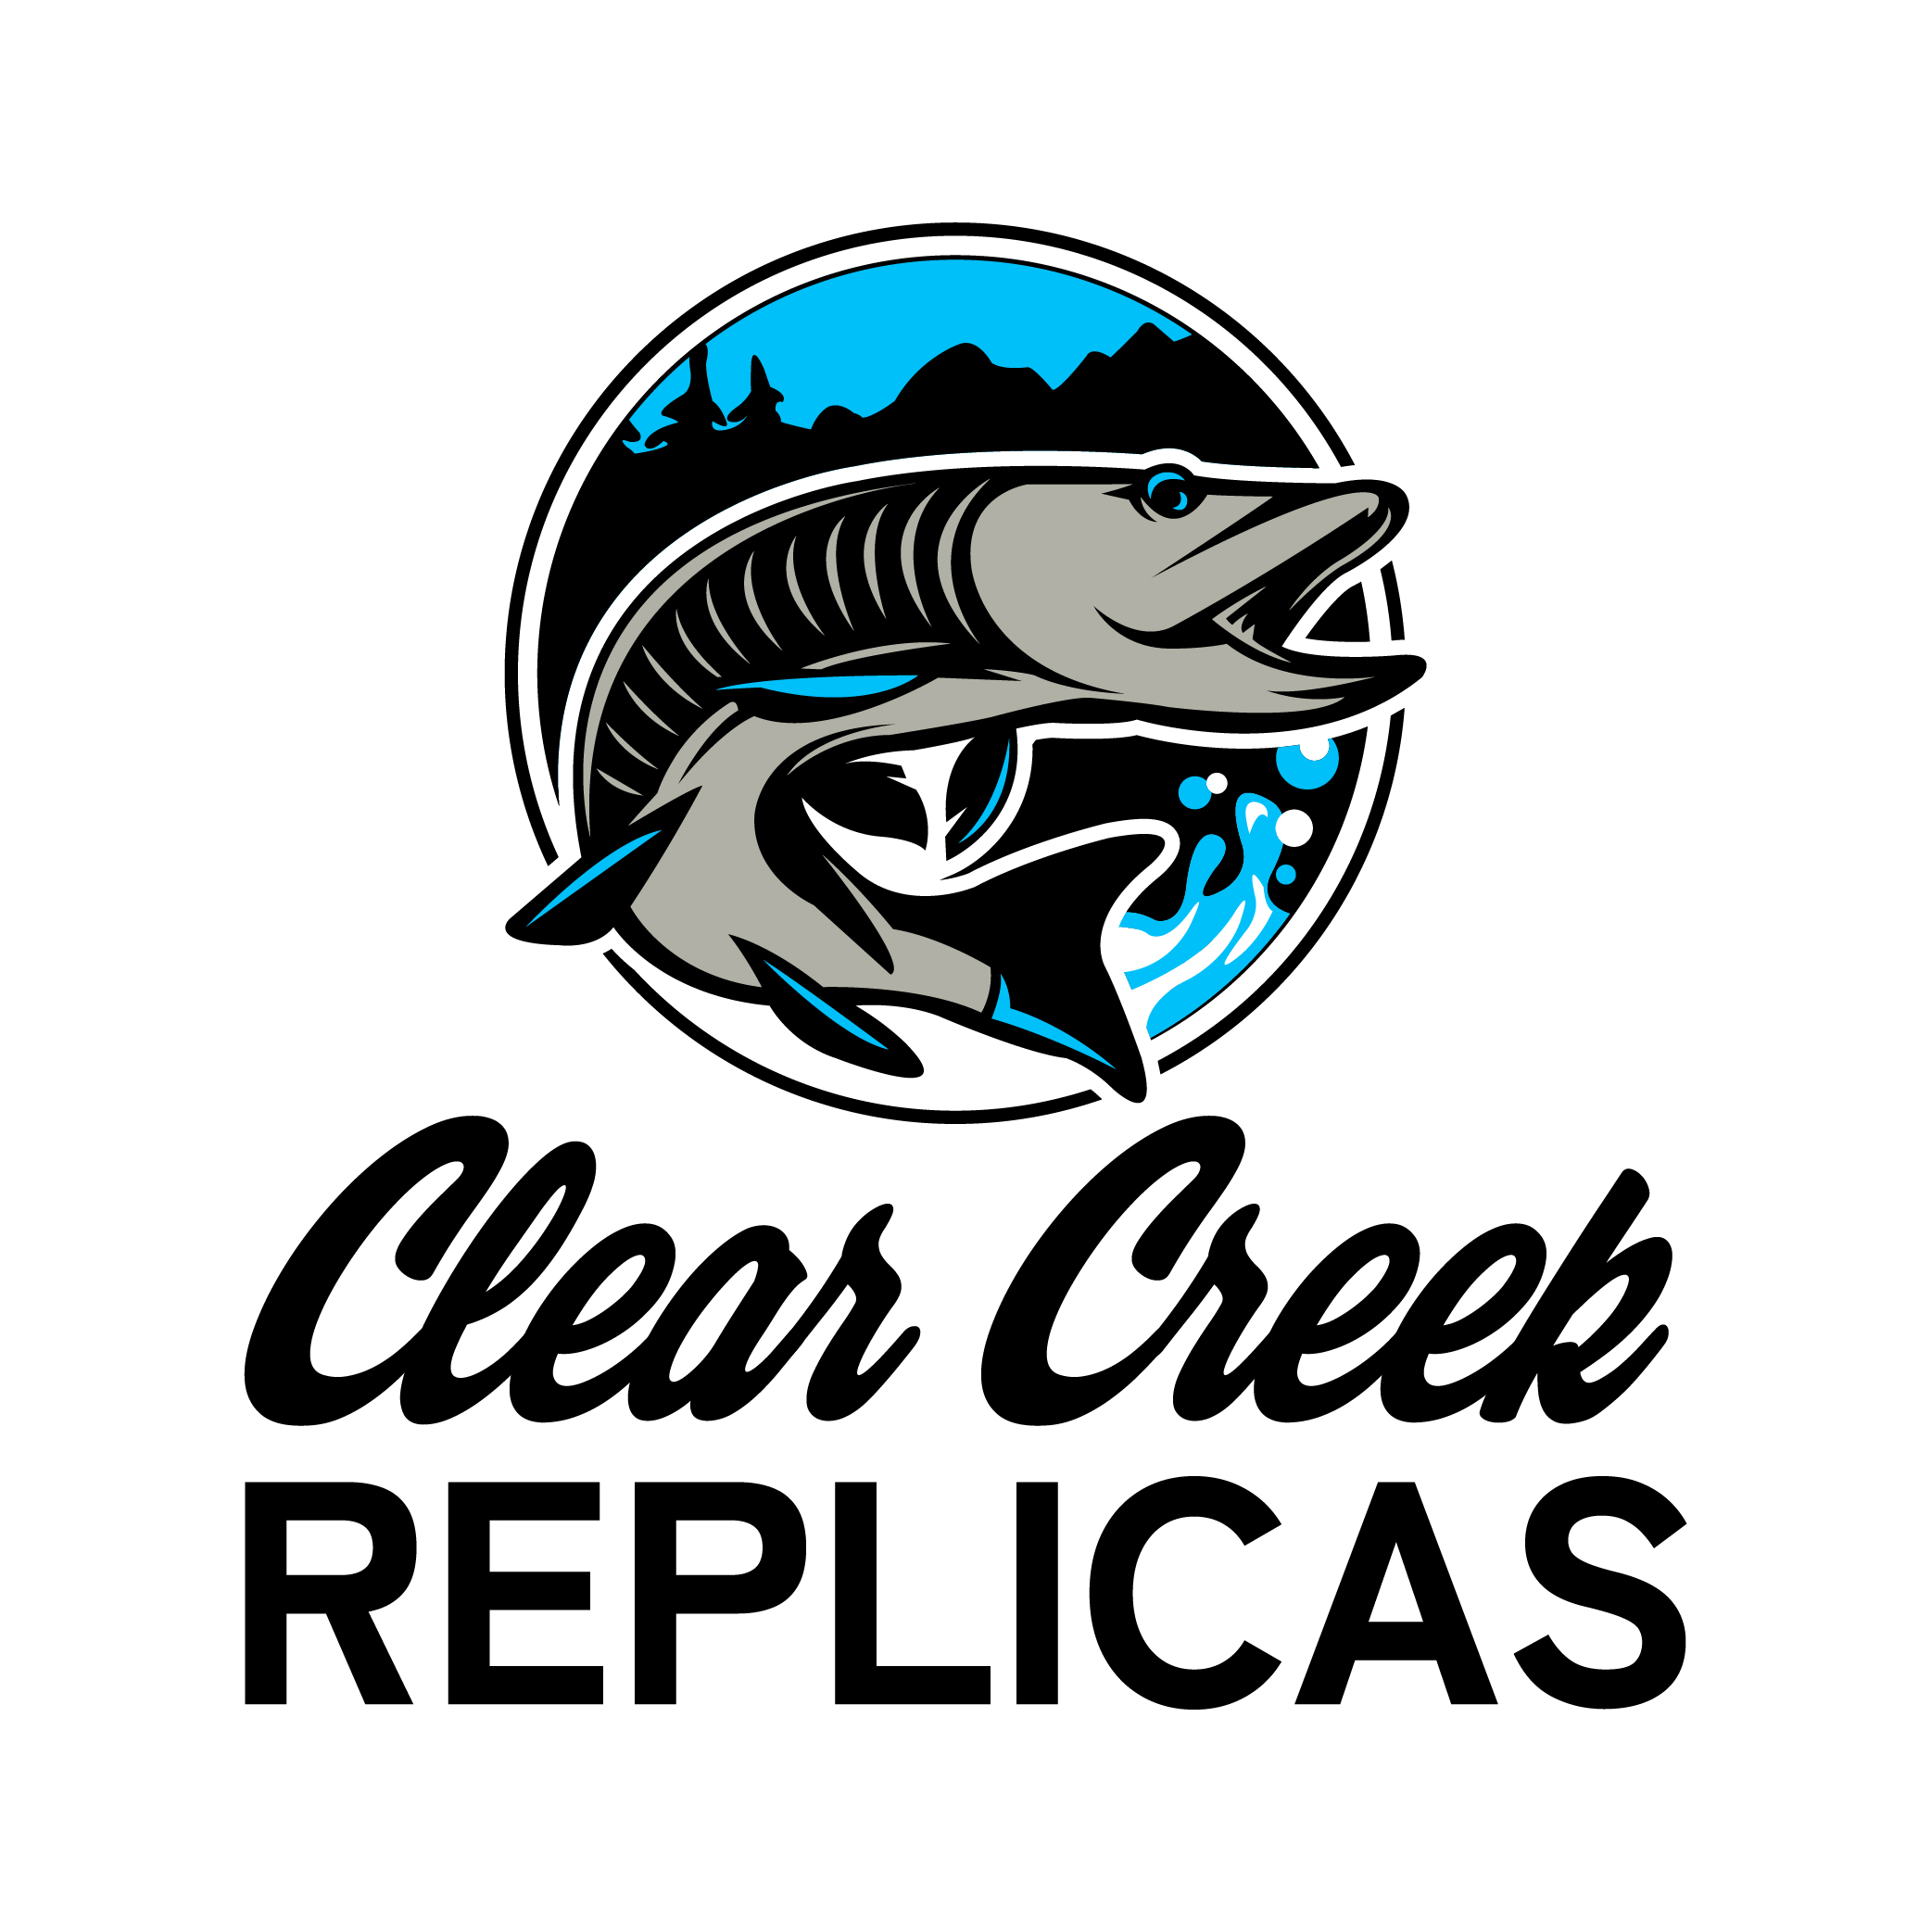 Clear Creek Replicas